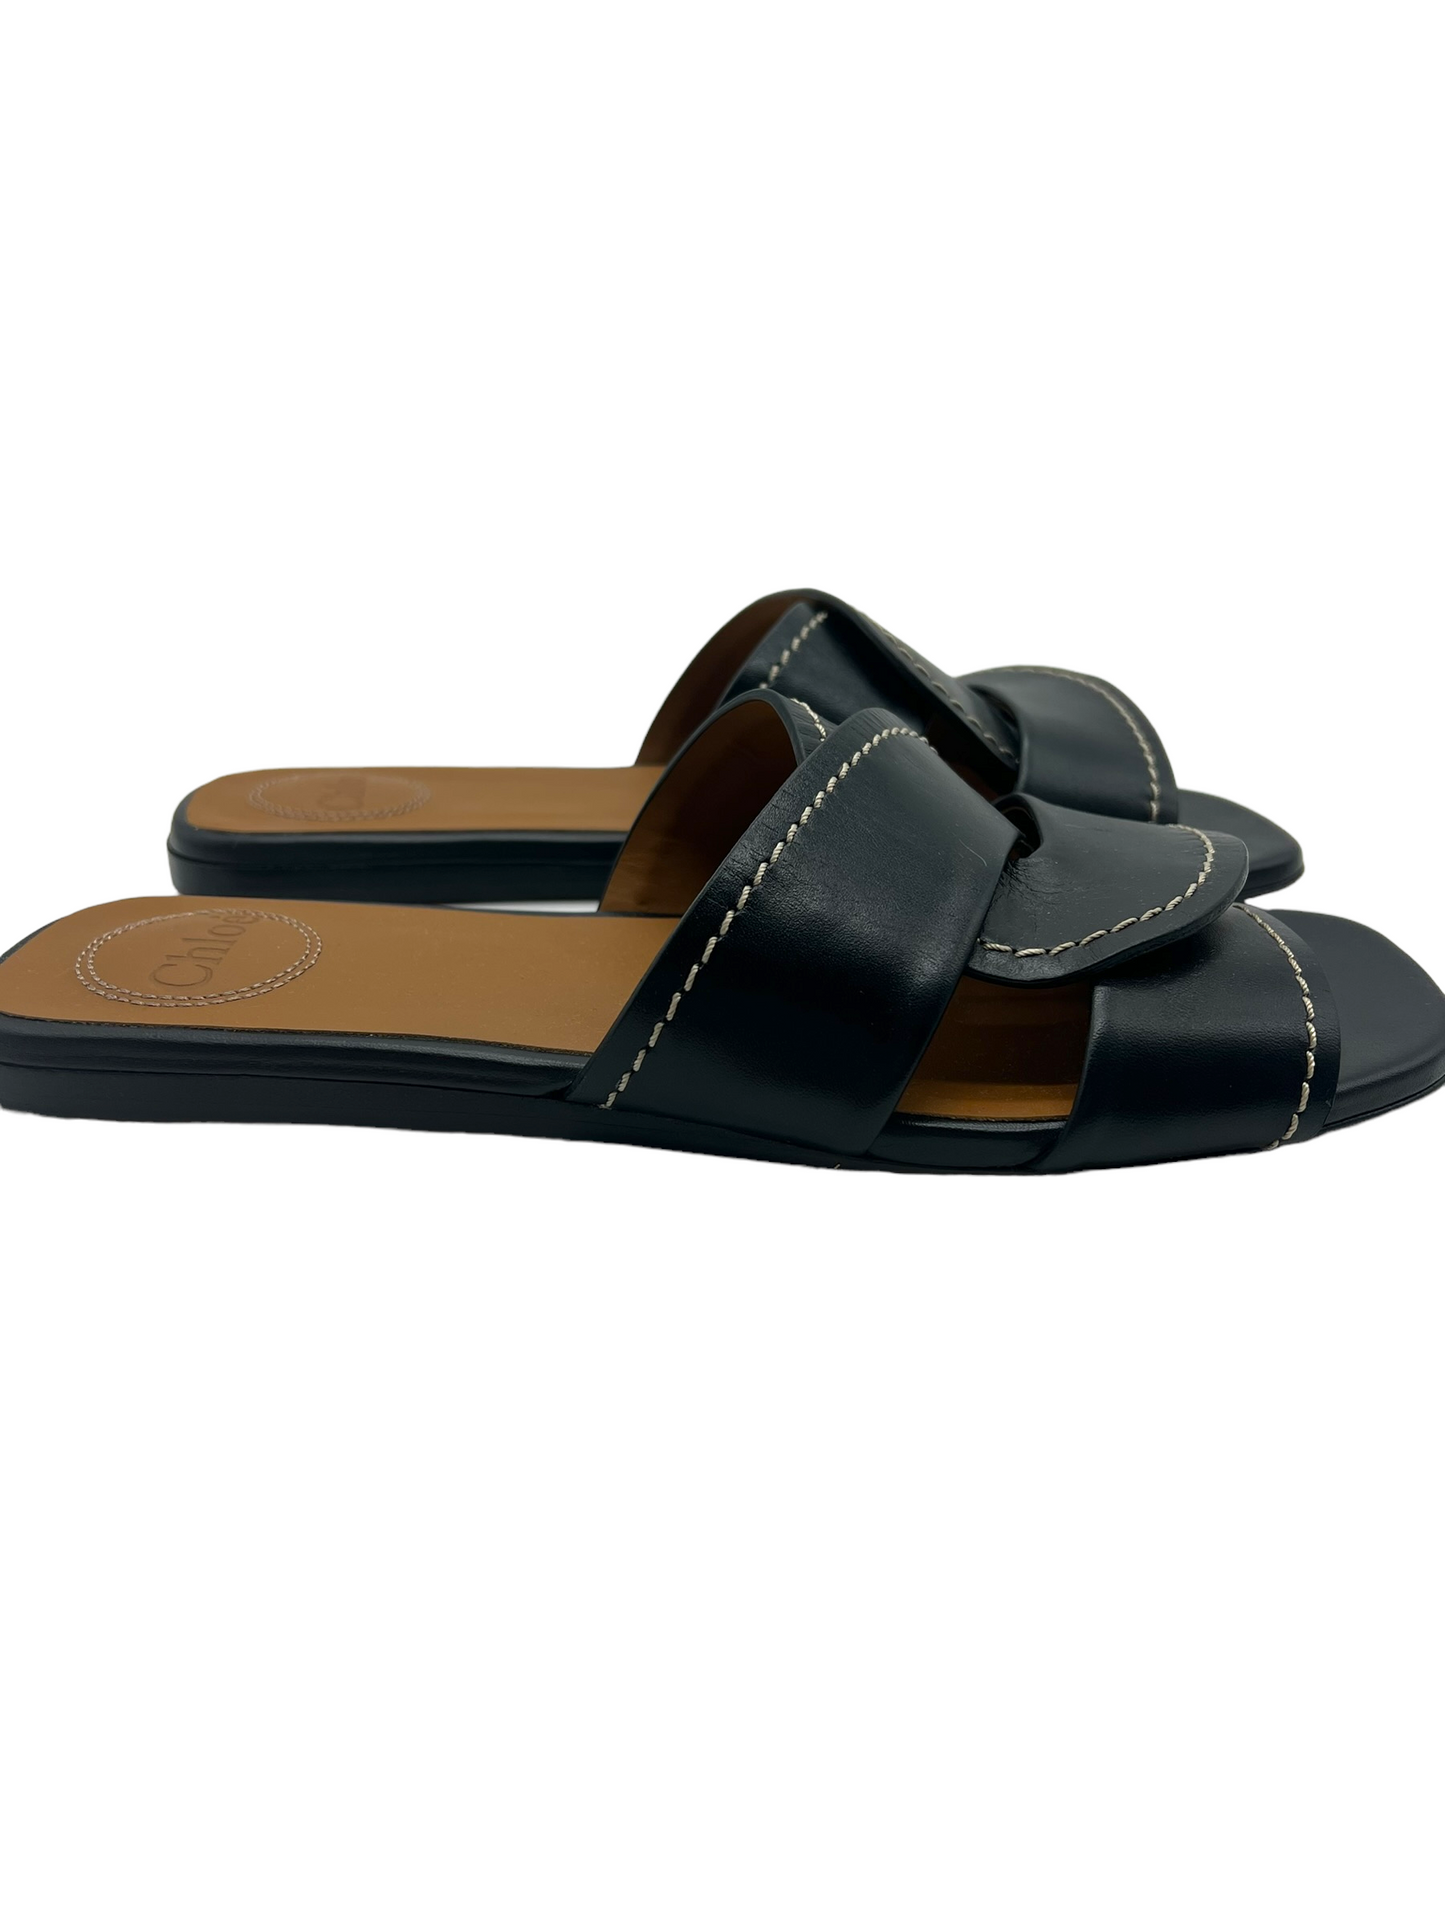 Chloe Black Leather Grecia Size 38 Slides